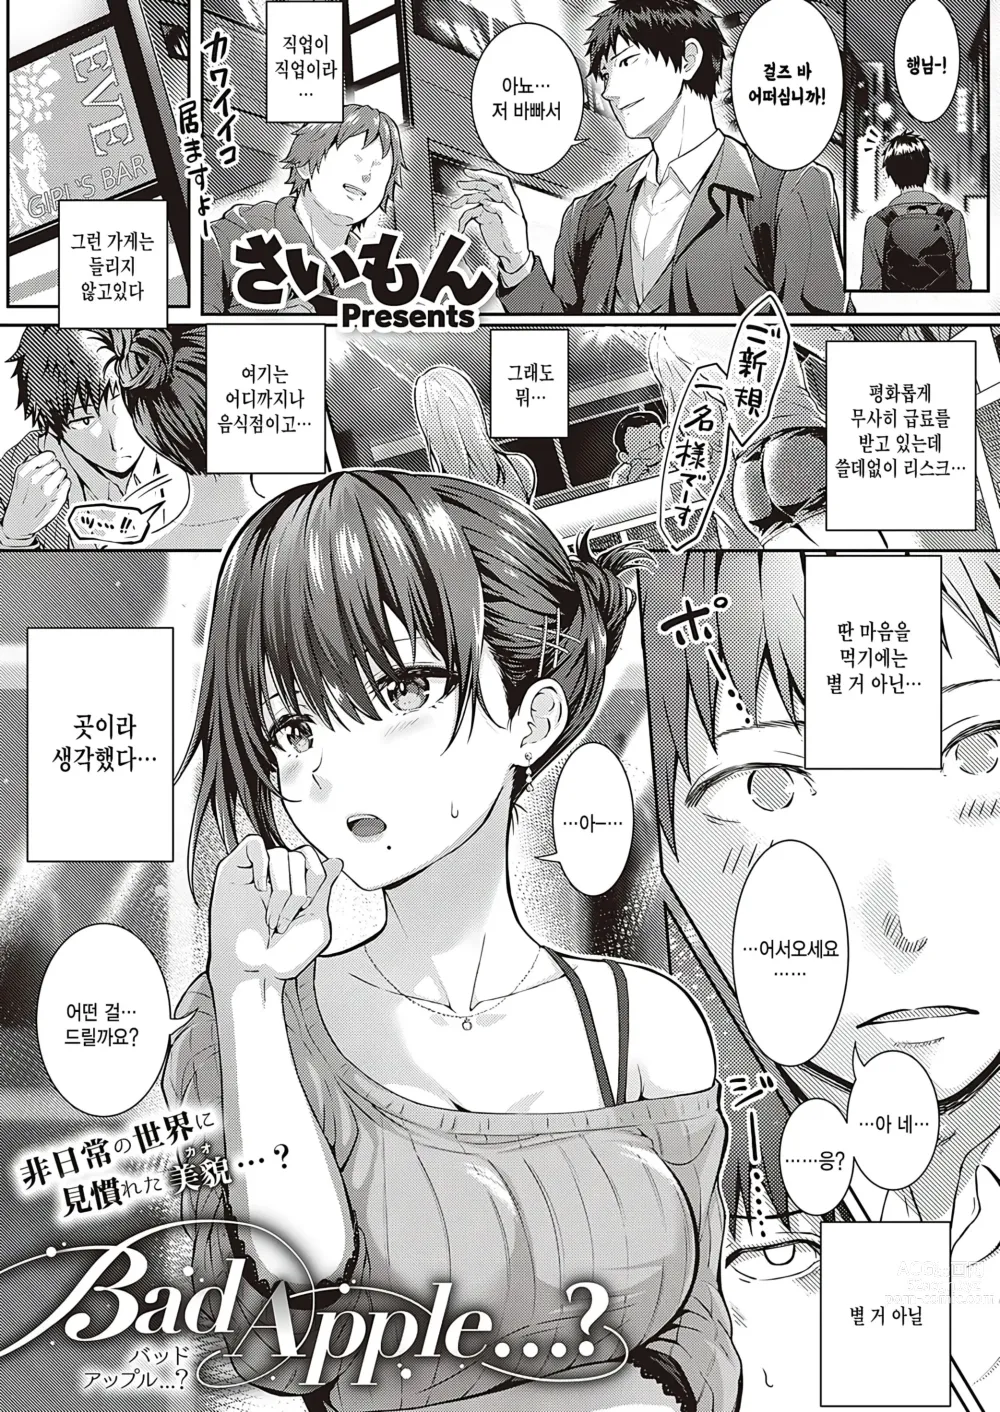 Page 1 of manga Bad apple...?